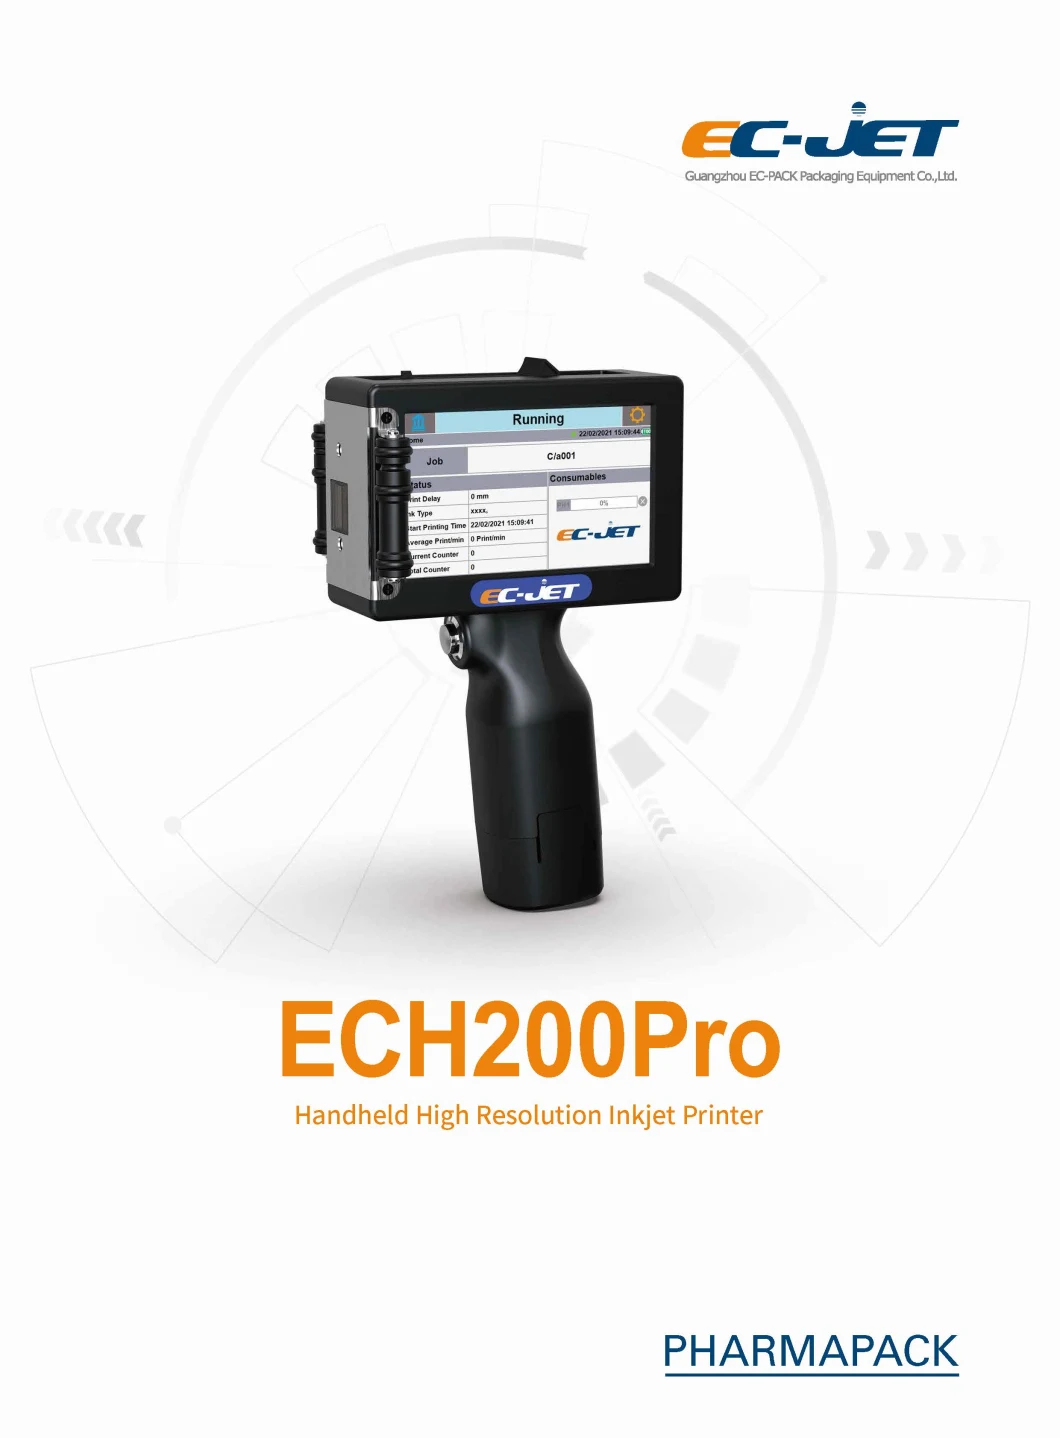 Carton Box Portable Handheld Inkjet Ec-Jet Printer (ECH200PRO)